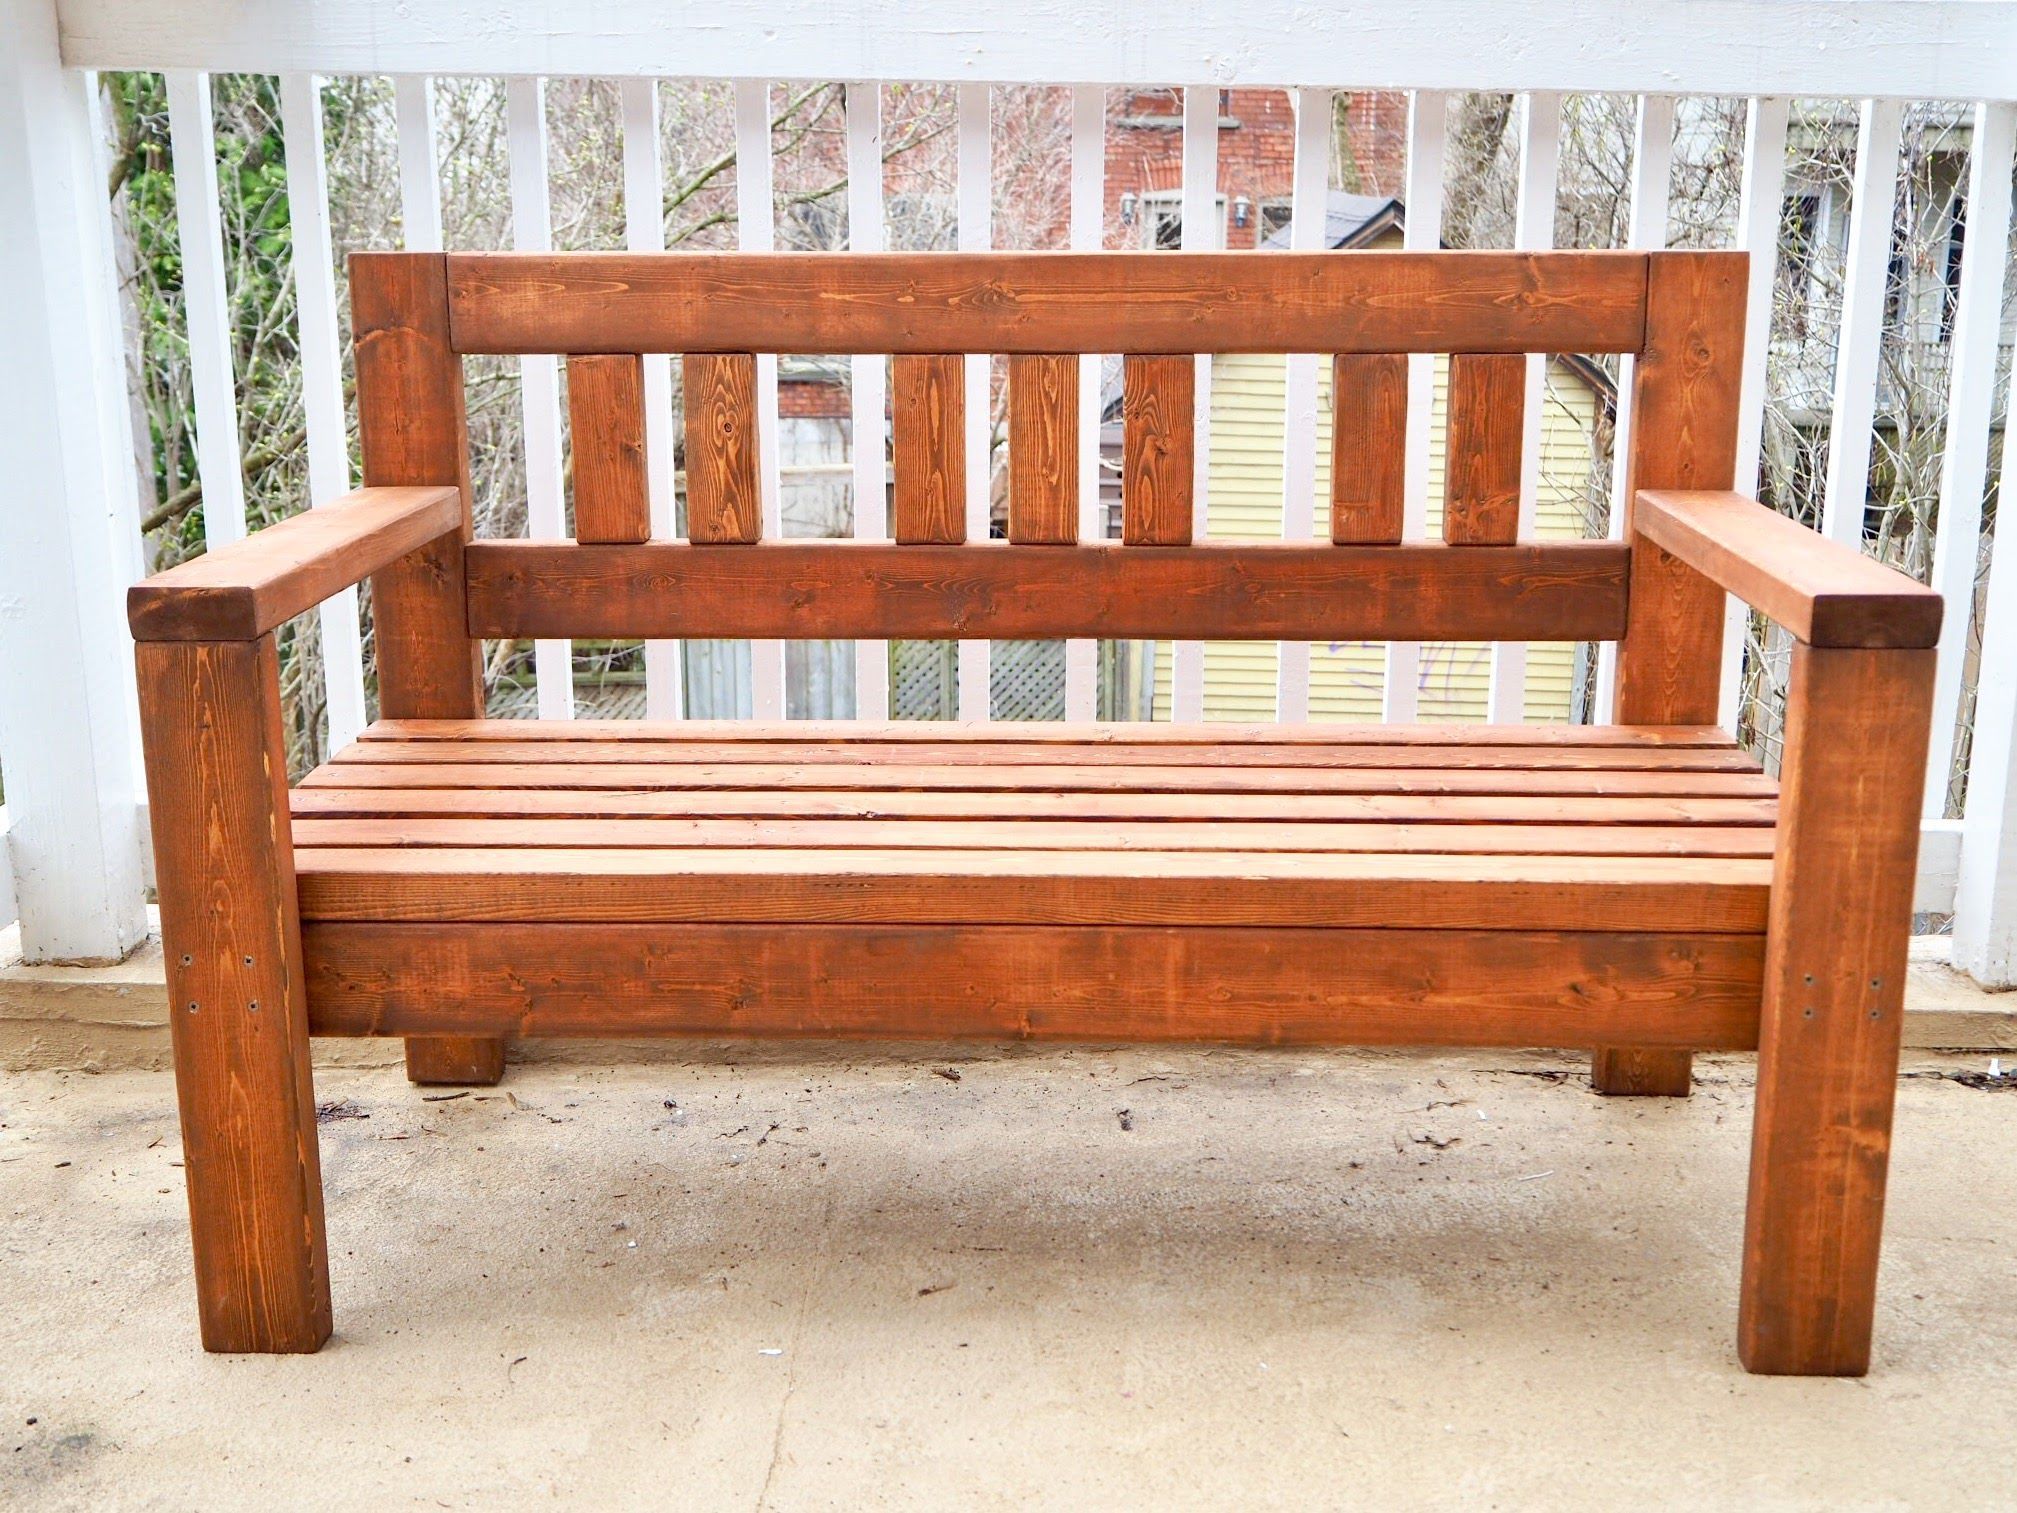 DIY outdoor seating wood bench patio deck furniture -   19 diy Wood bench ideas